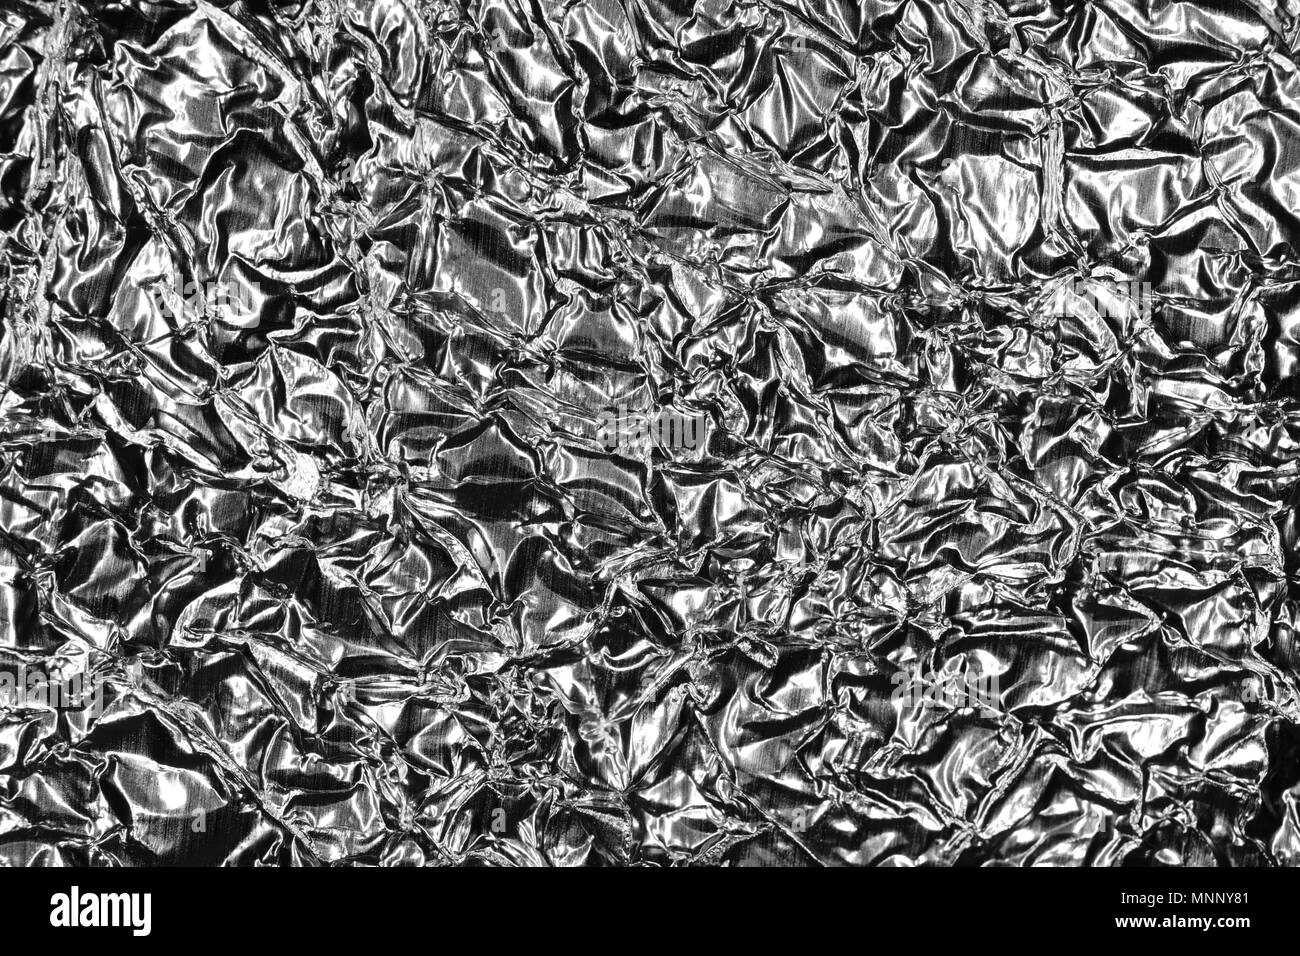 https://c8.alamy.com/comp/MNNY81/monochrome-metallic-crumpled-foil-texture-black-white-background-MNNY81.jpg